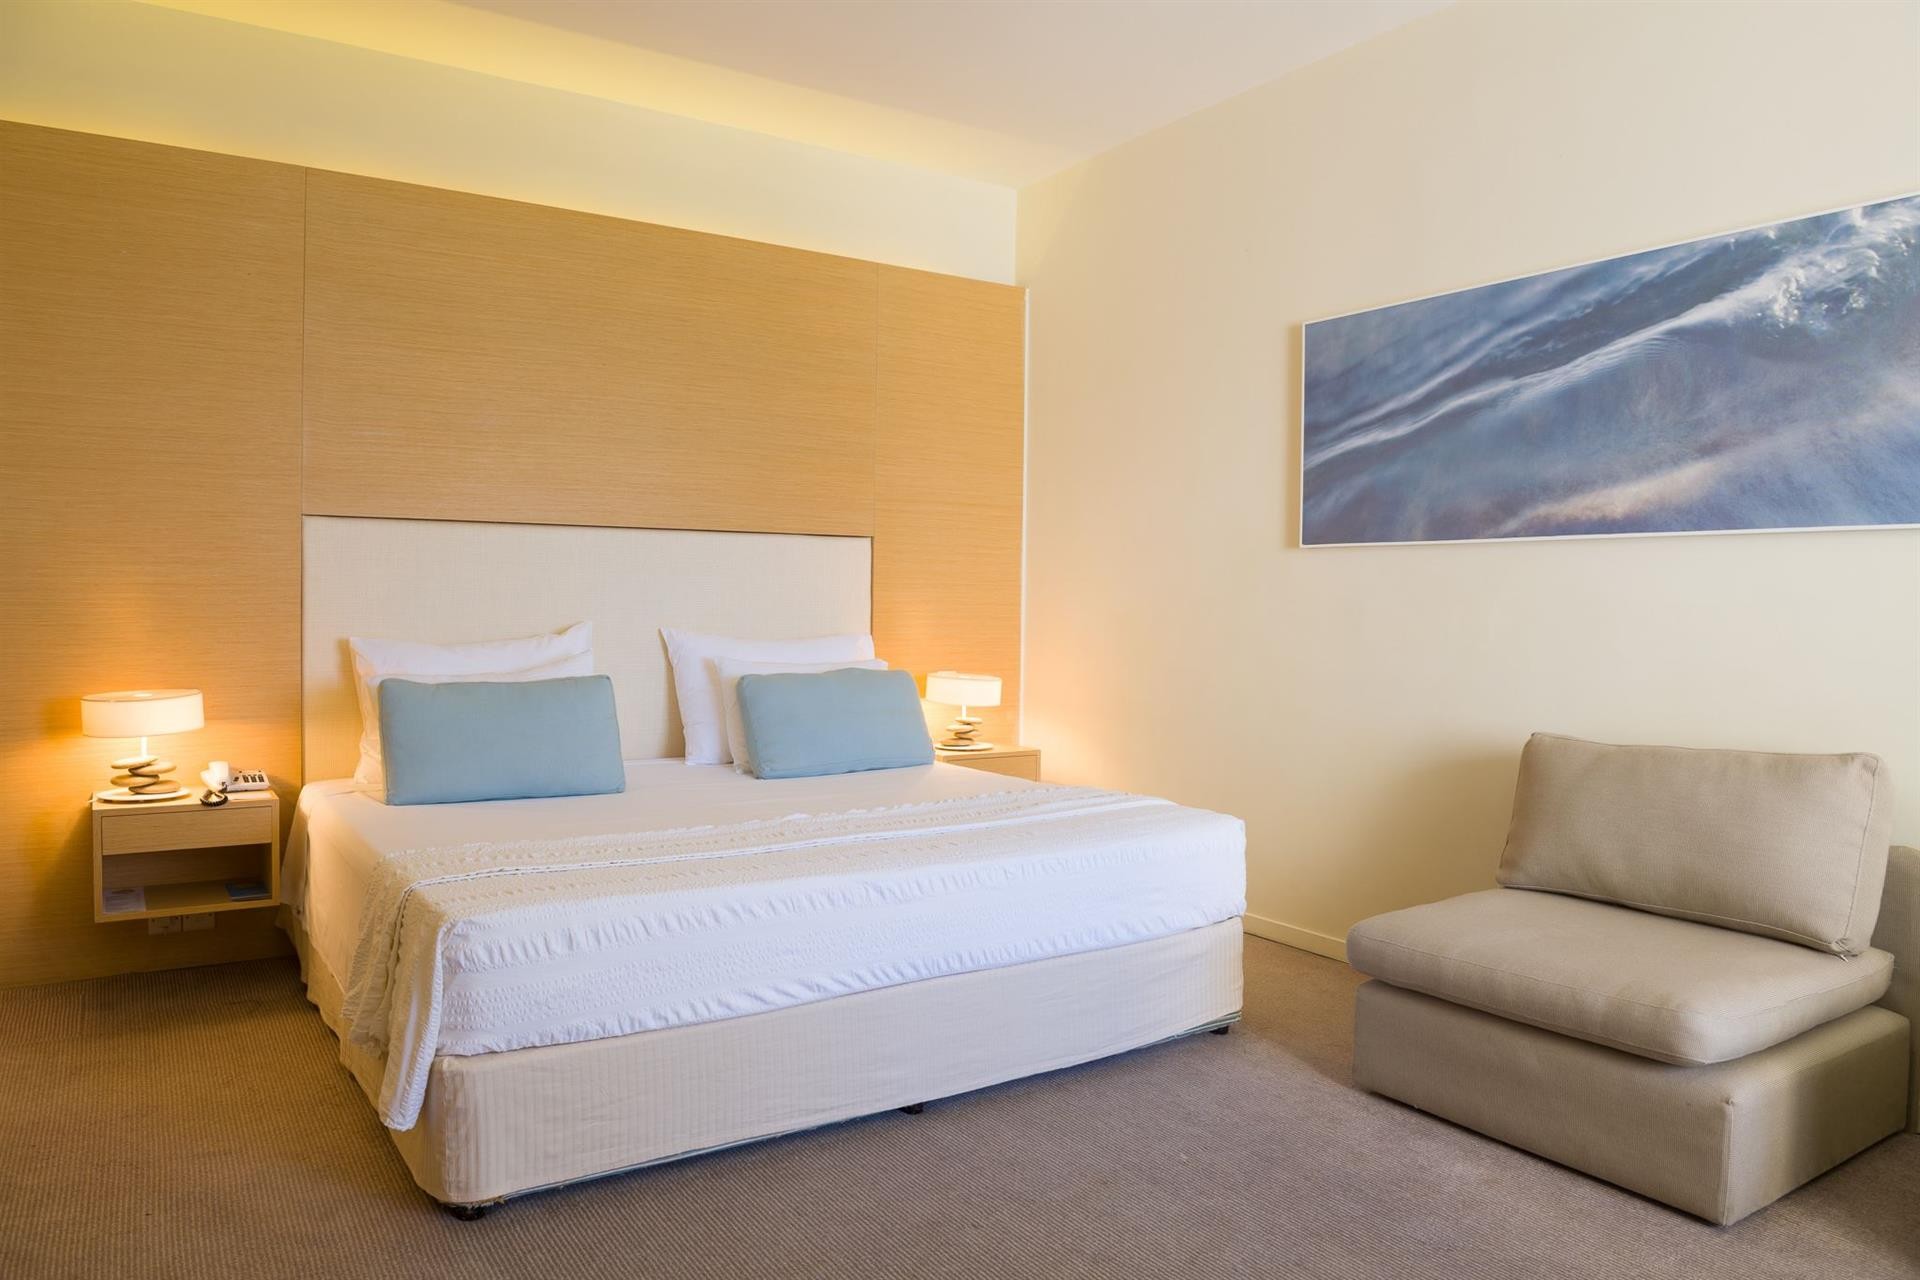 Triple Room, Capo Bay Hotel 4*